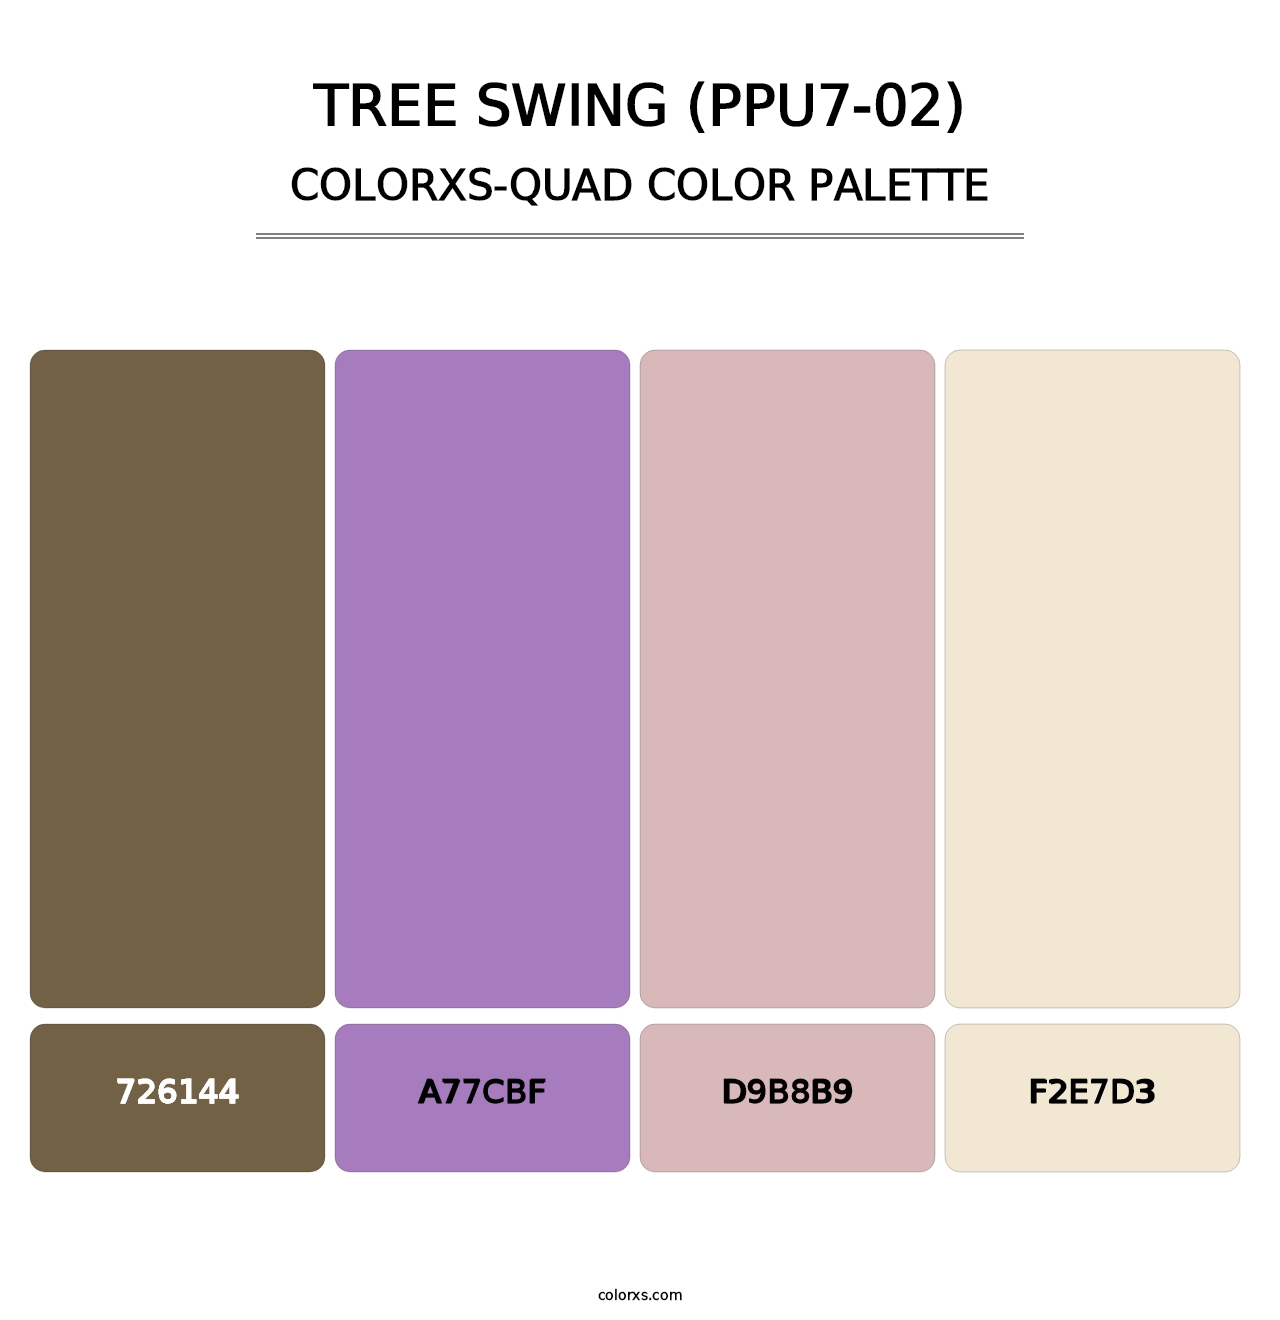 Tree Swing (PPU7-02) - Colorxs Quad Palette